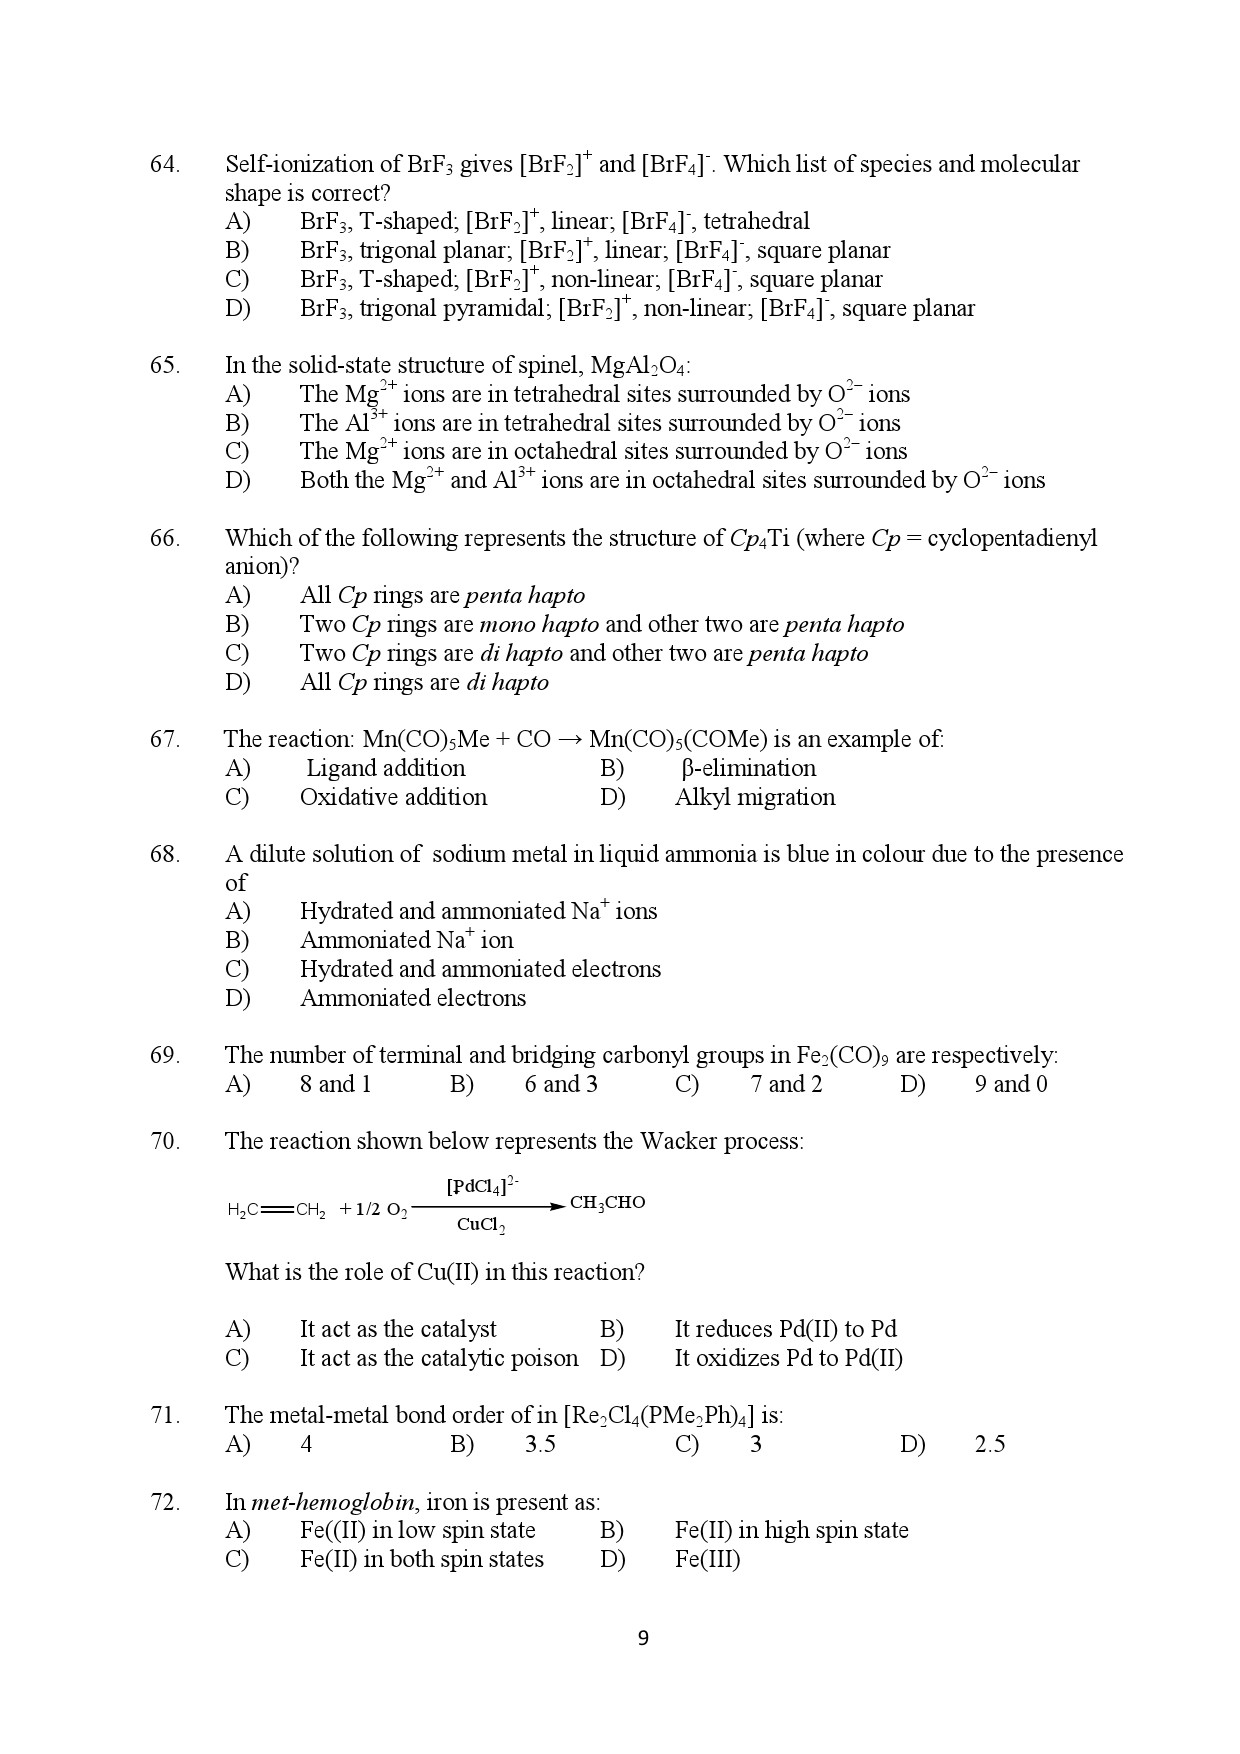 Kerala SET Chemistry Exam Question Paper February 2020 9